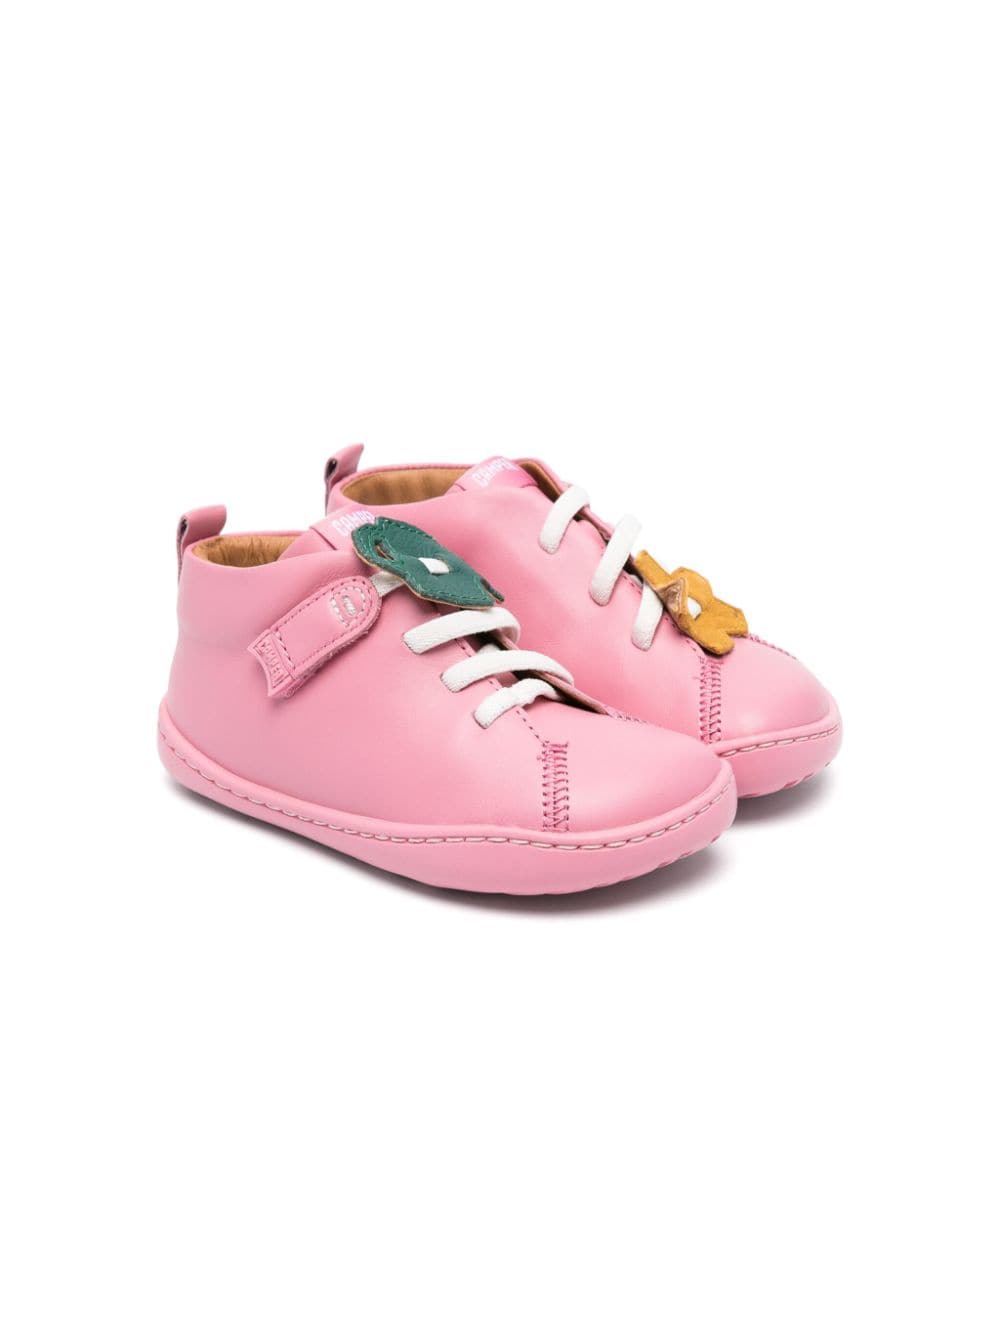 Camper Kids Twins floral-appliqué leather sneakers - Pink von Camper Kids